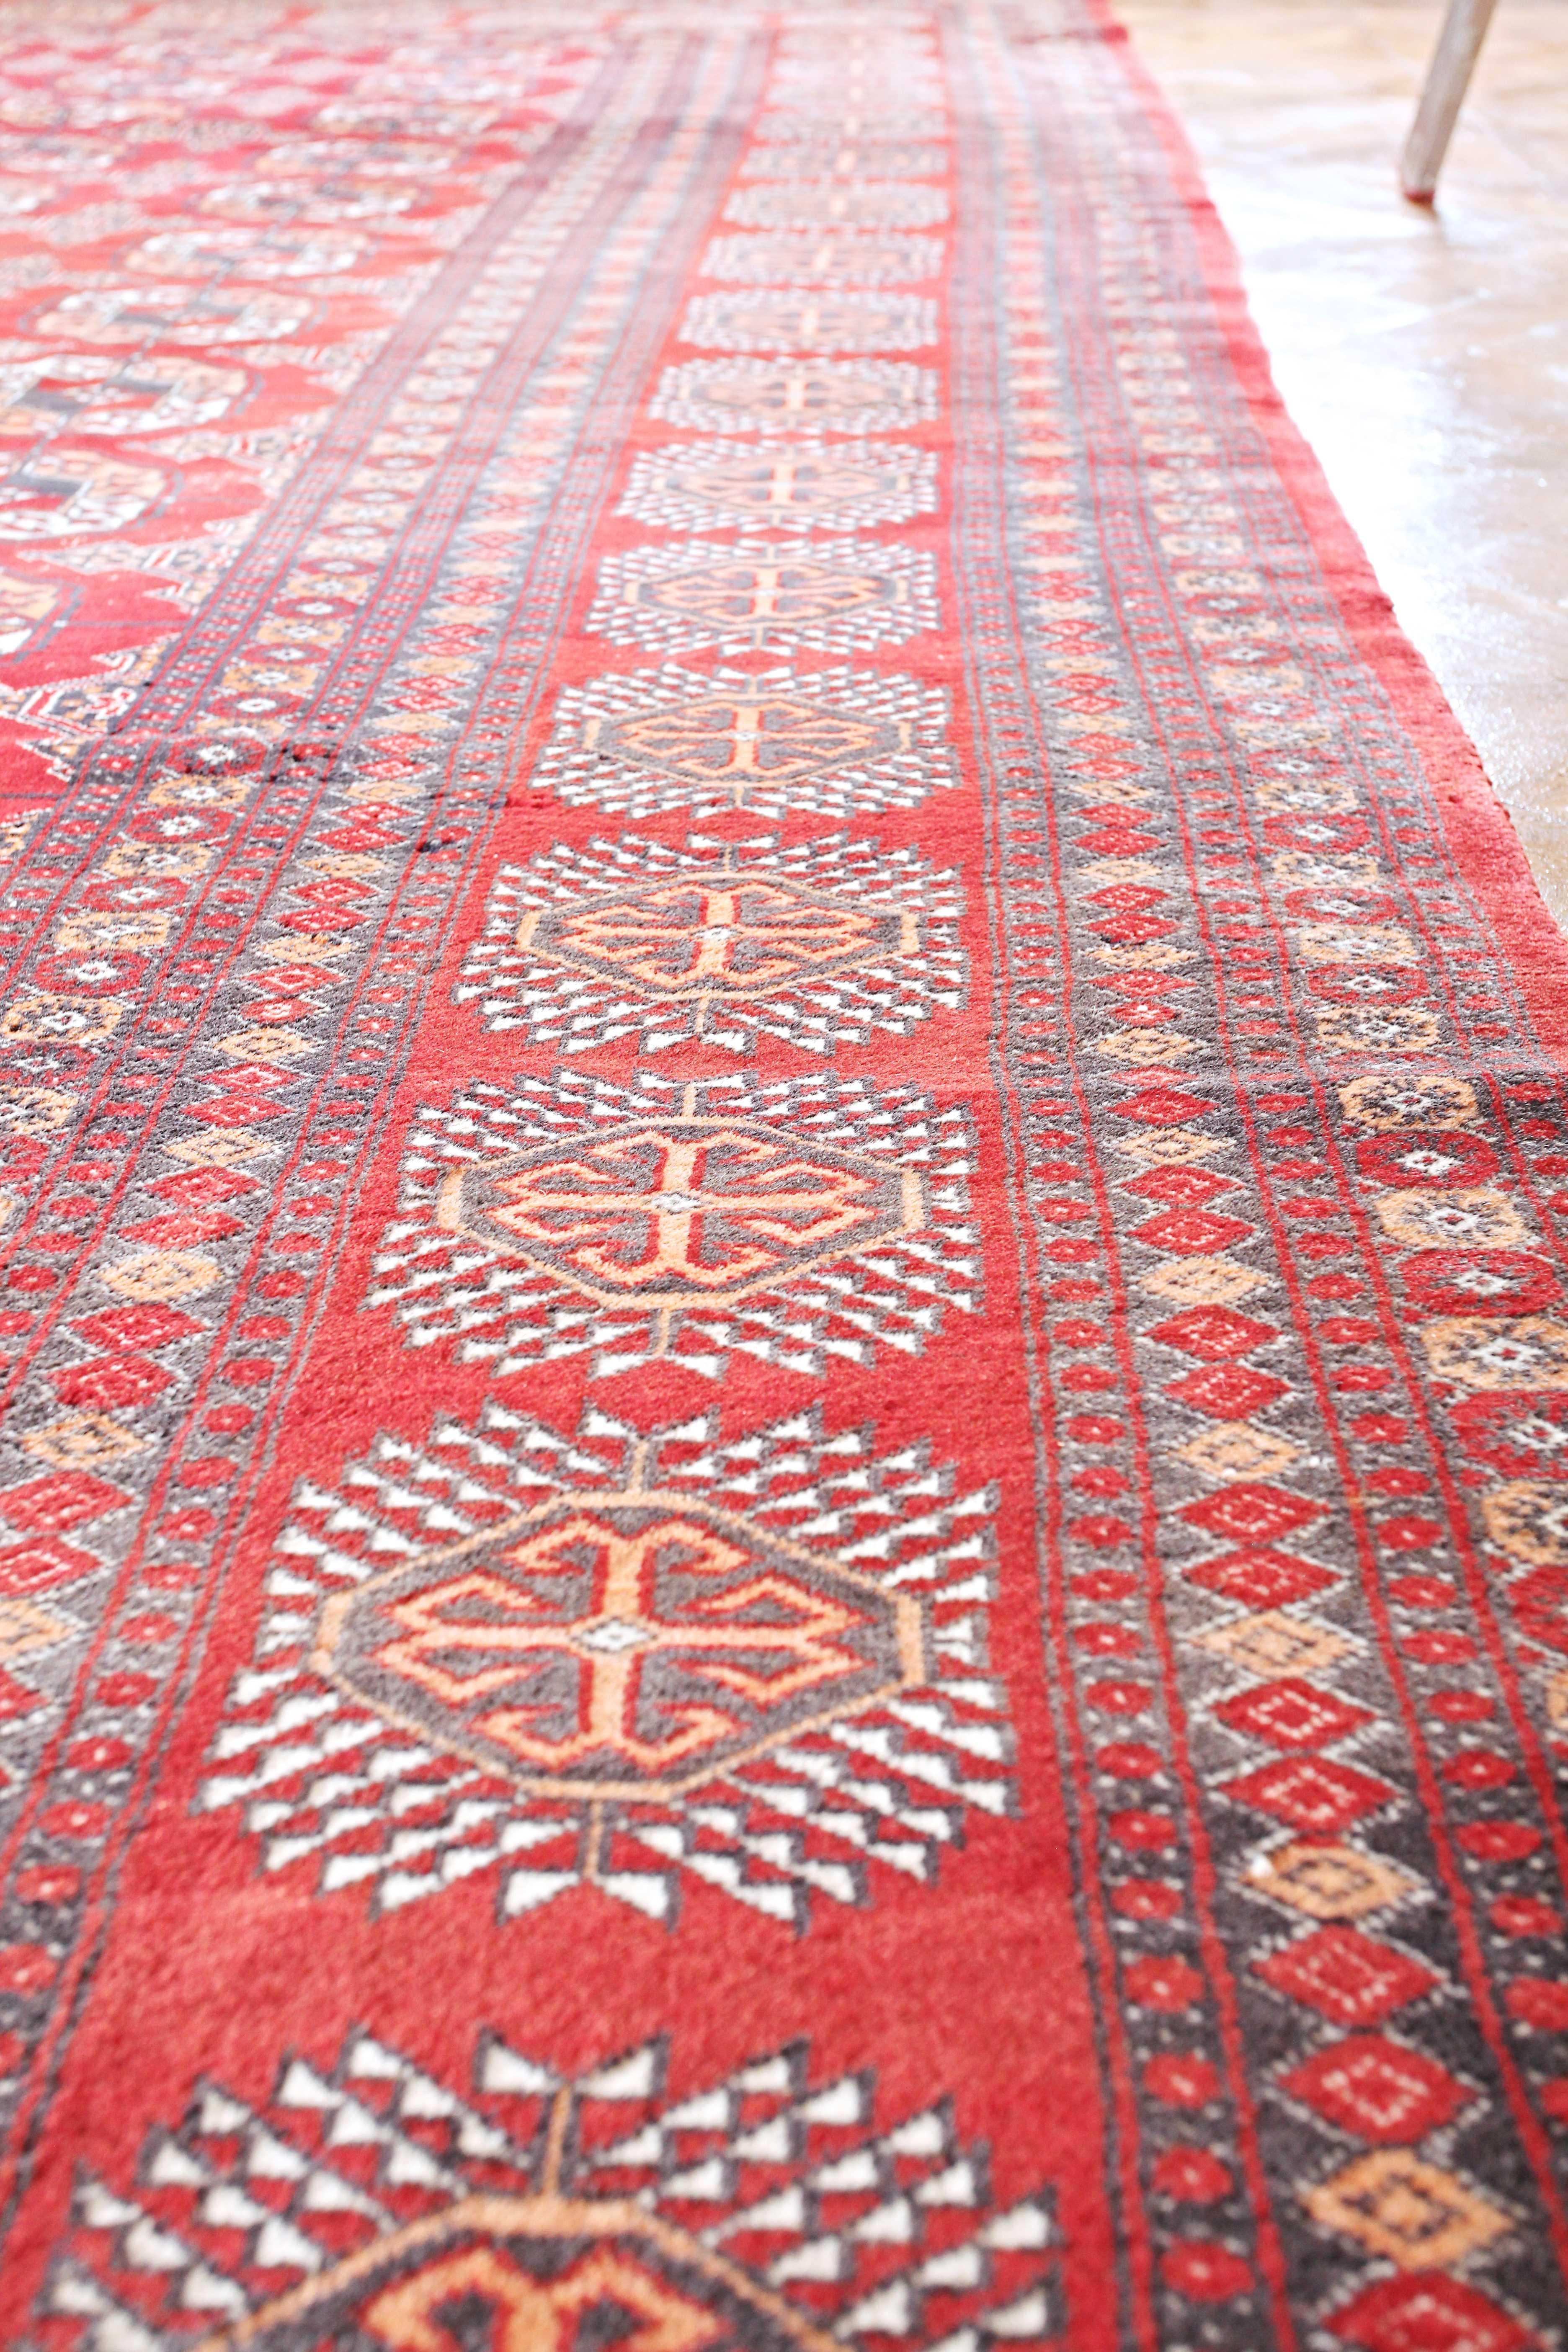 Giant oriental carpet from Pakistan 457 X 315 cm In Good Condition For Sale In STRAČOV, CZ